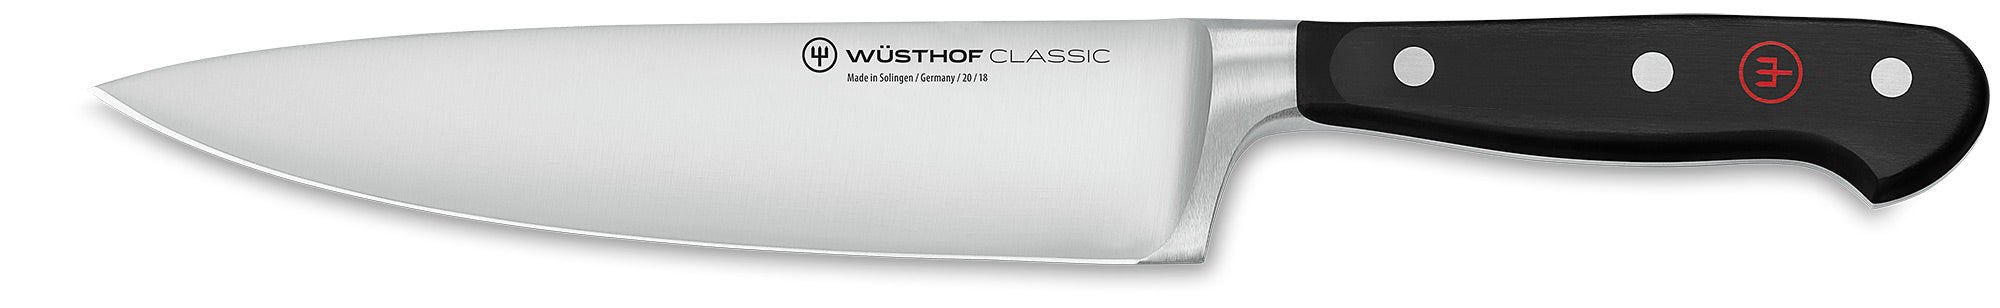 Wusthof Classic Cook's Knife, 8-inch (20 cm) - 4582-20 Canada